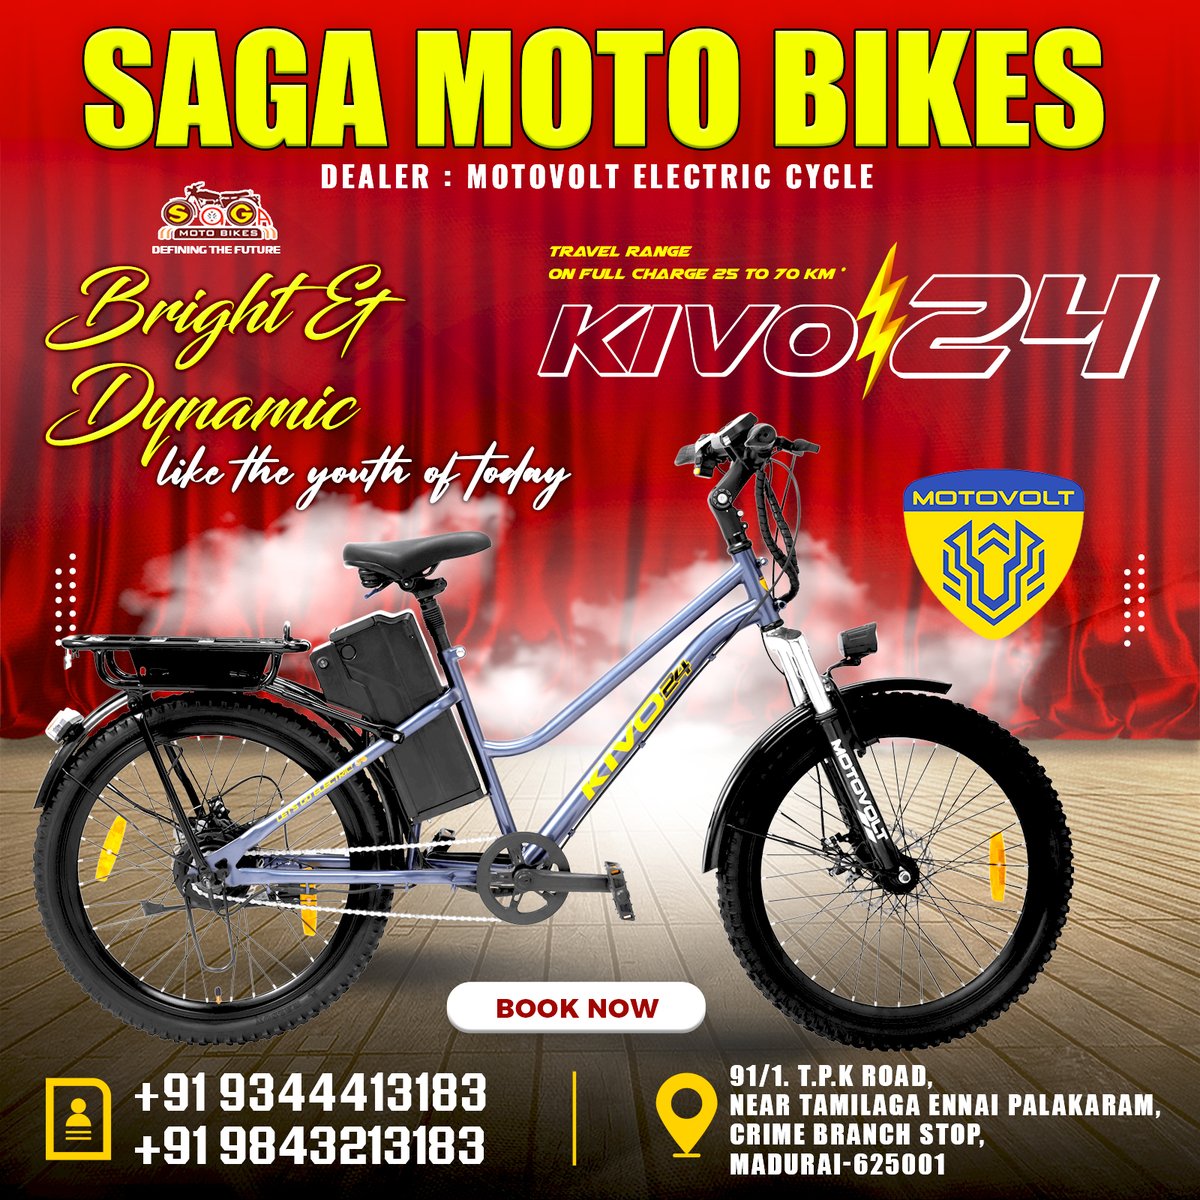 Kivo24 - Saga Moto Bikes - Motovolt Electric Cycle - Madurai #serviceandwarranty #dealer #pedalassistmode #EnergyStorage #assistedbike #fastandflexing #improvefitness #ecofriendly #newtech #battery #urbn #safety #rideinfo #customersupport #performance #savings #trend #shop #hum